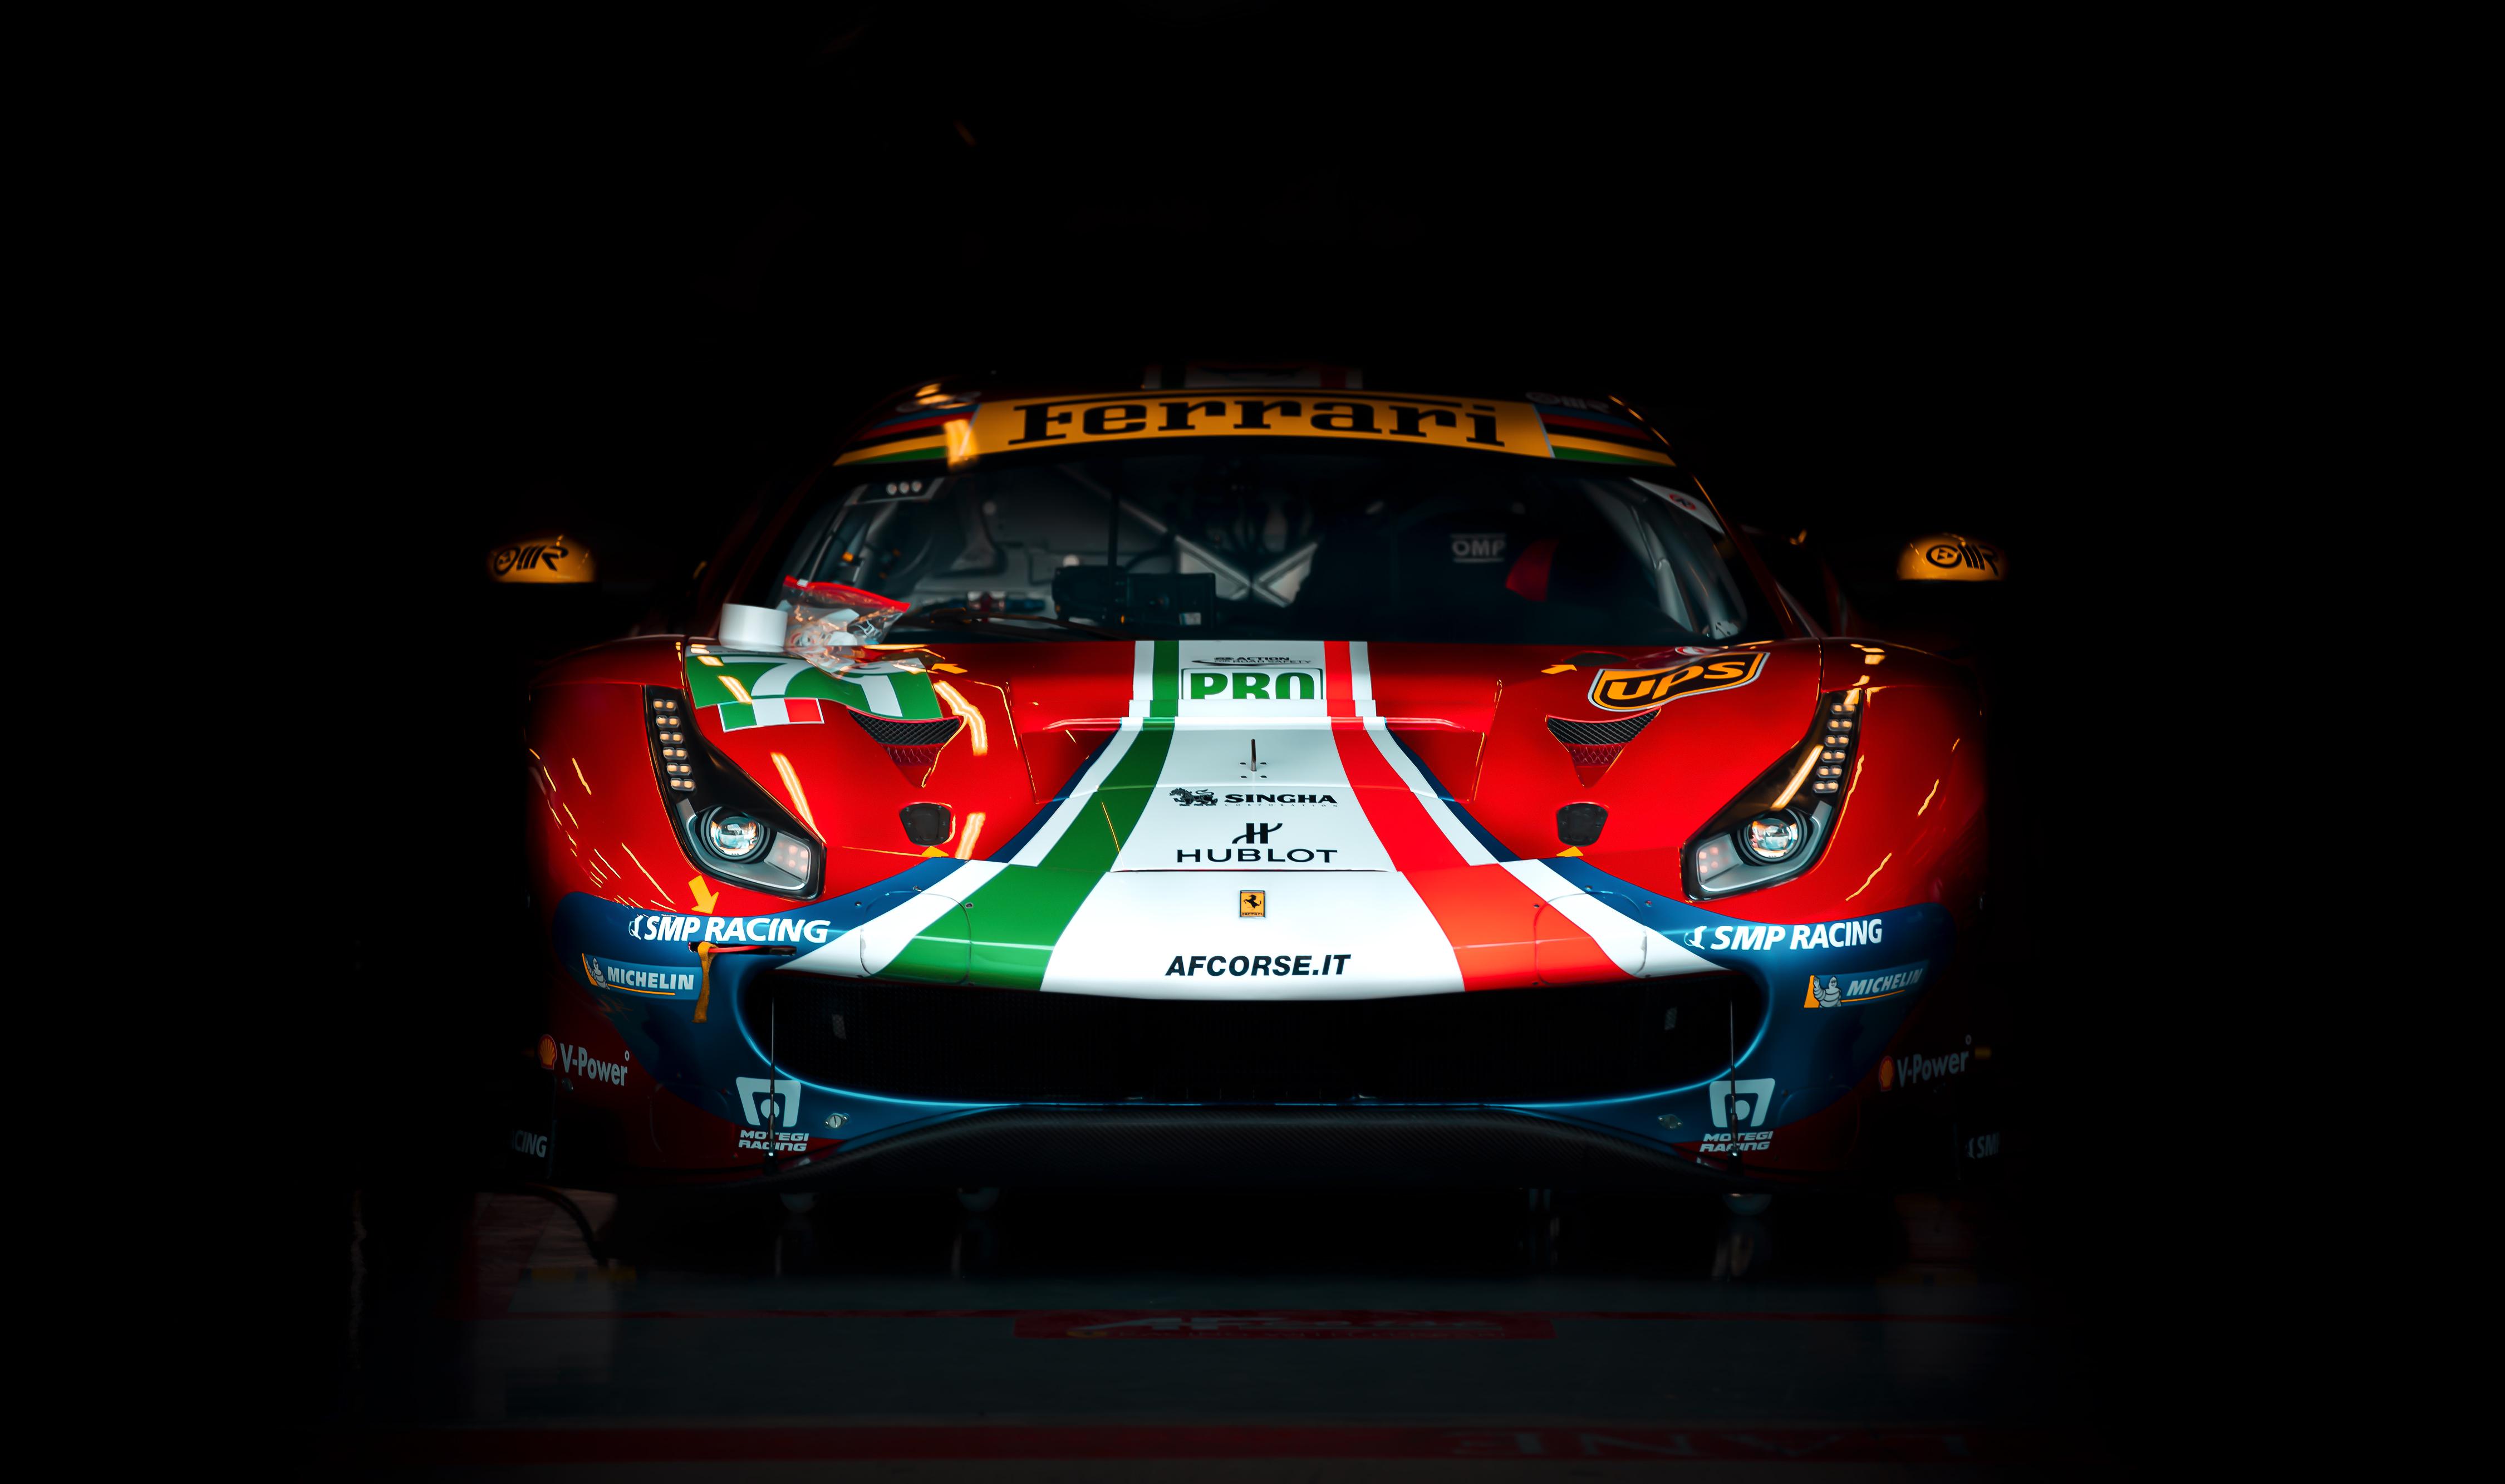 Ferrari Geneve Wallpapers